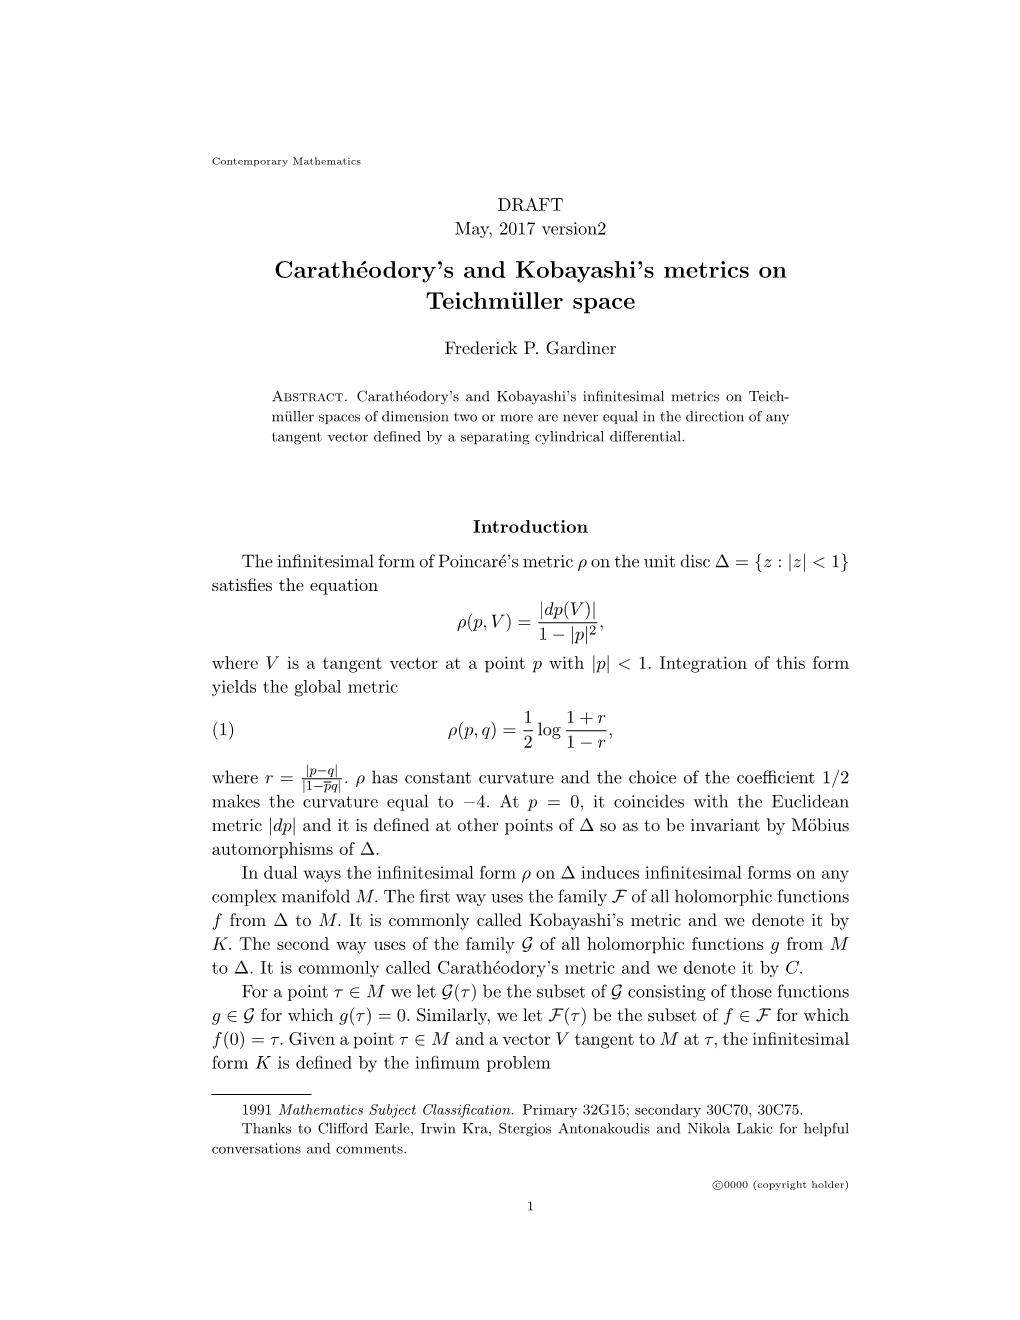 Carathéodory's and Kobayashi's Metrics on Teichmüller Space